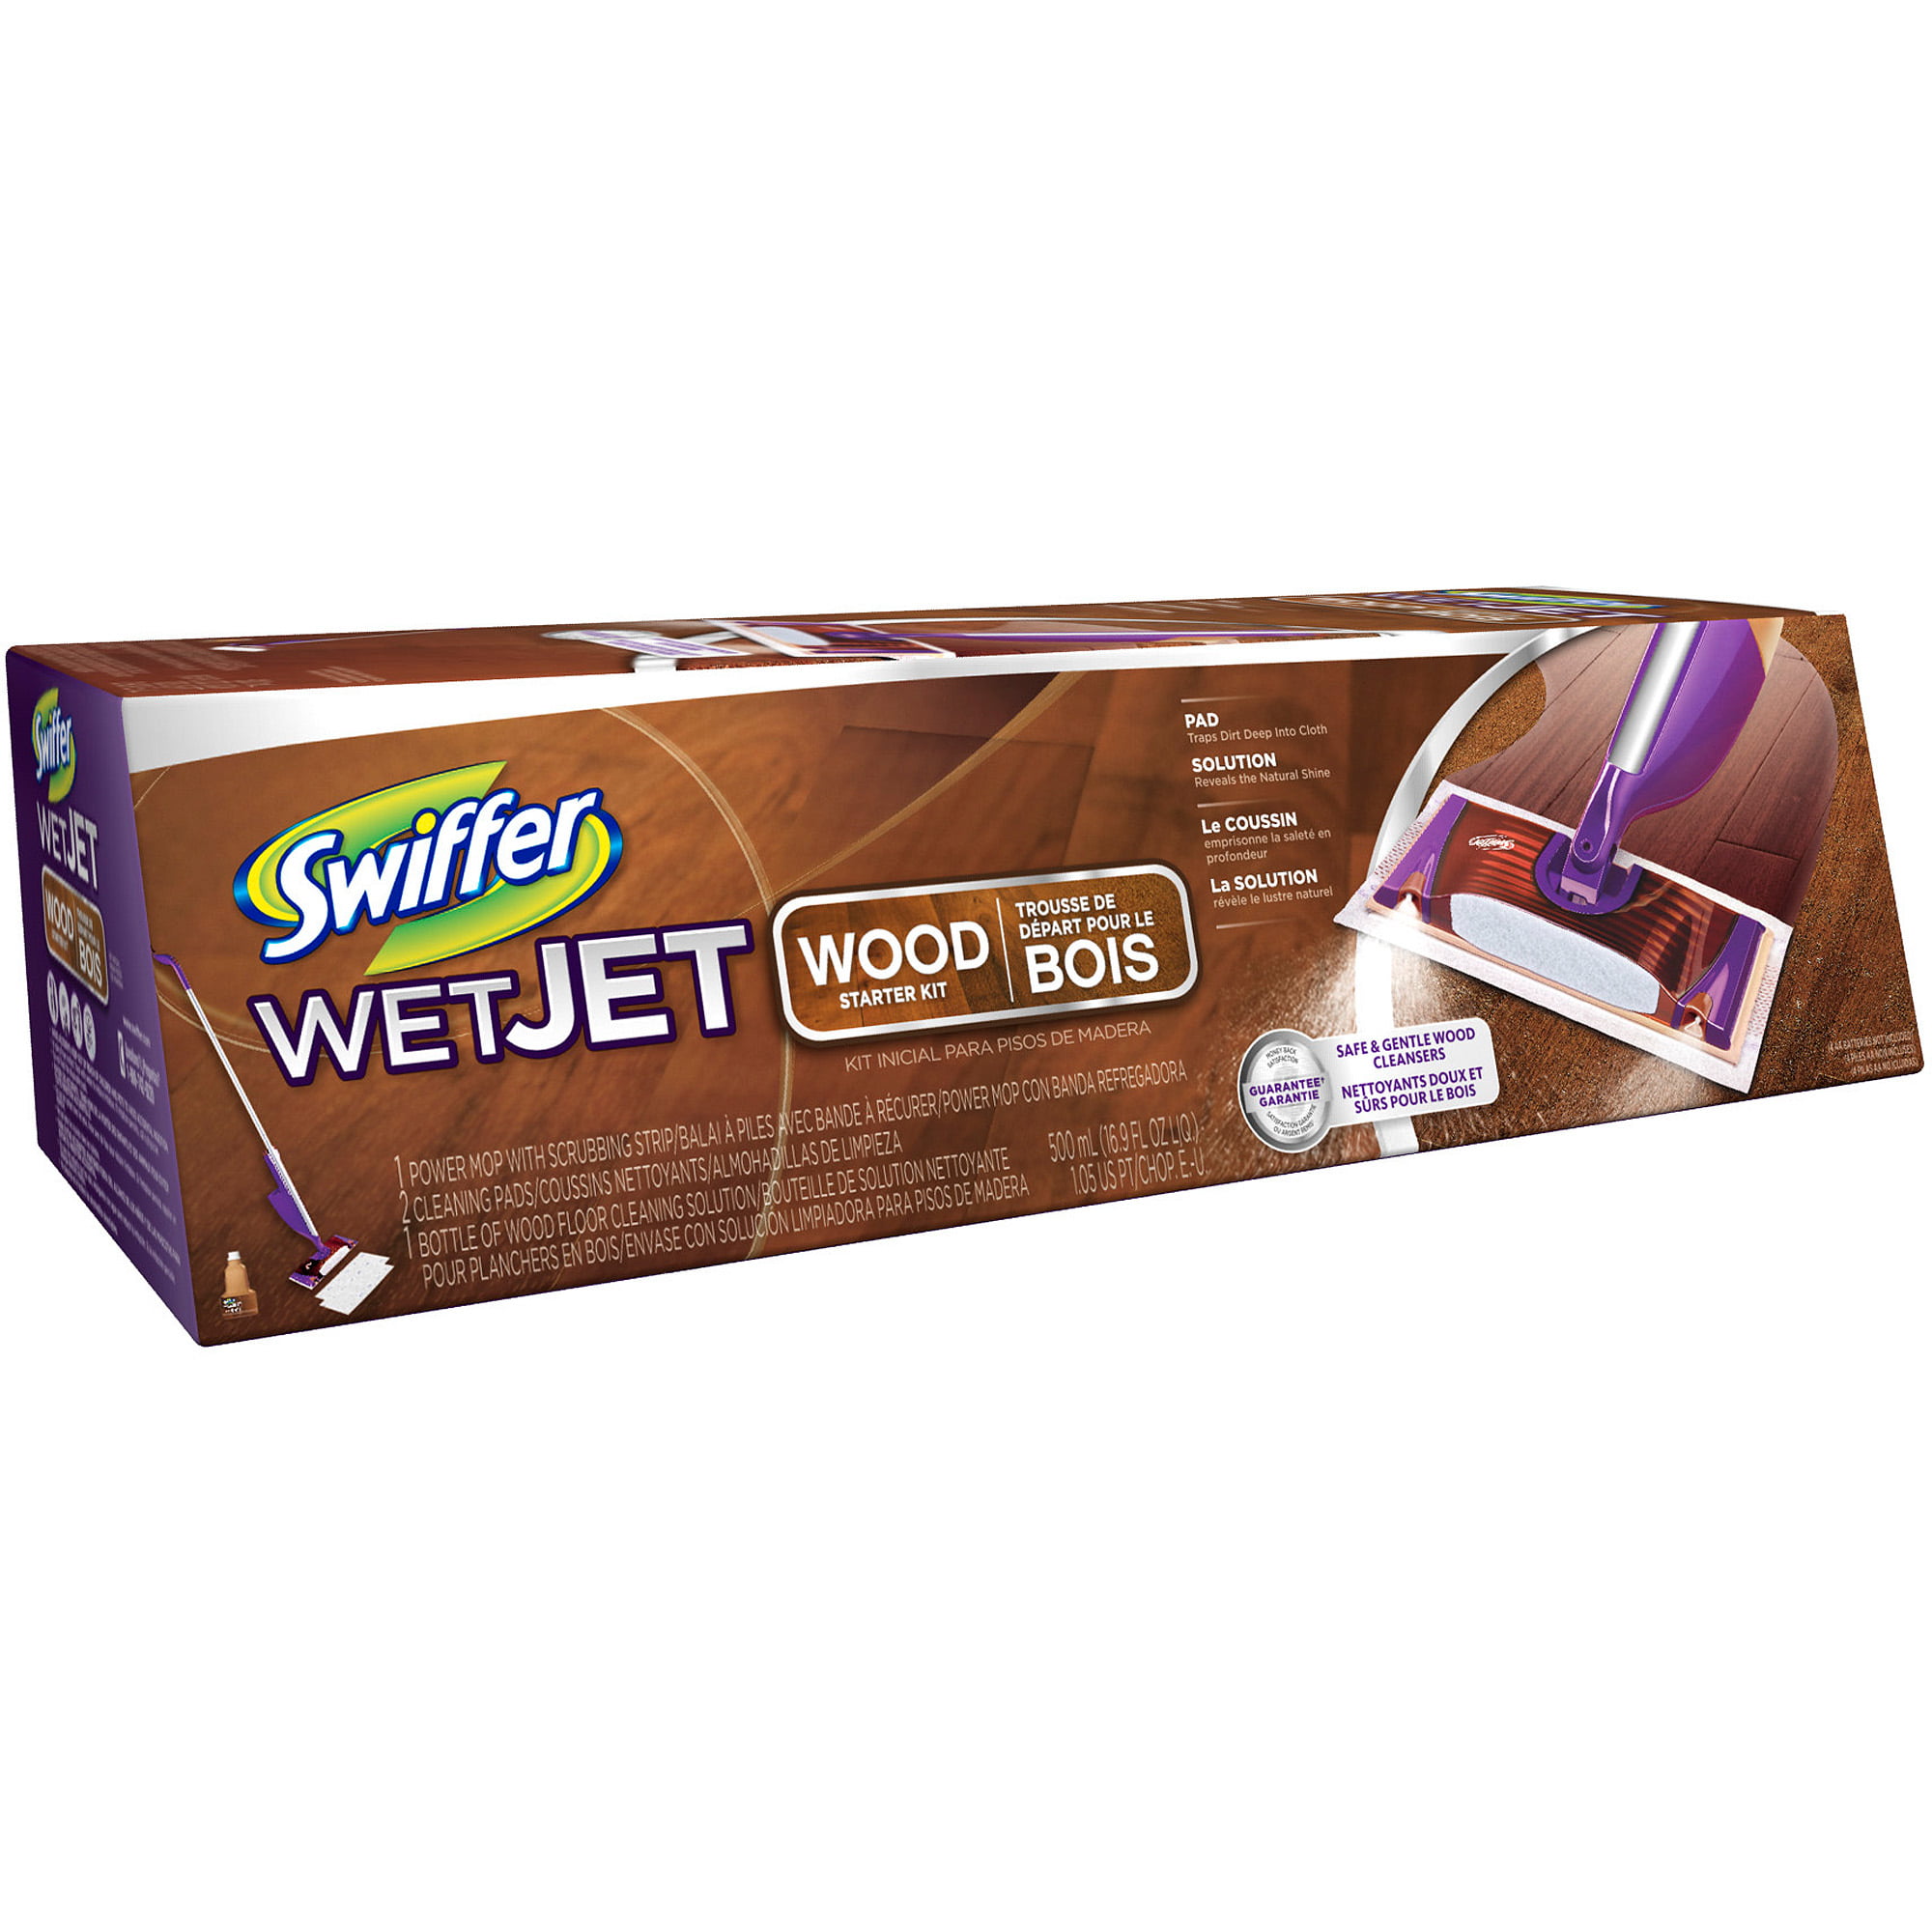 Swiffer Wet Jet Wood Starter Kit - Walmart.com - 